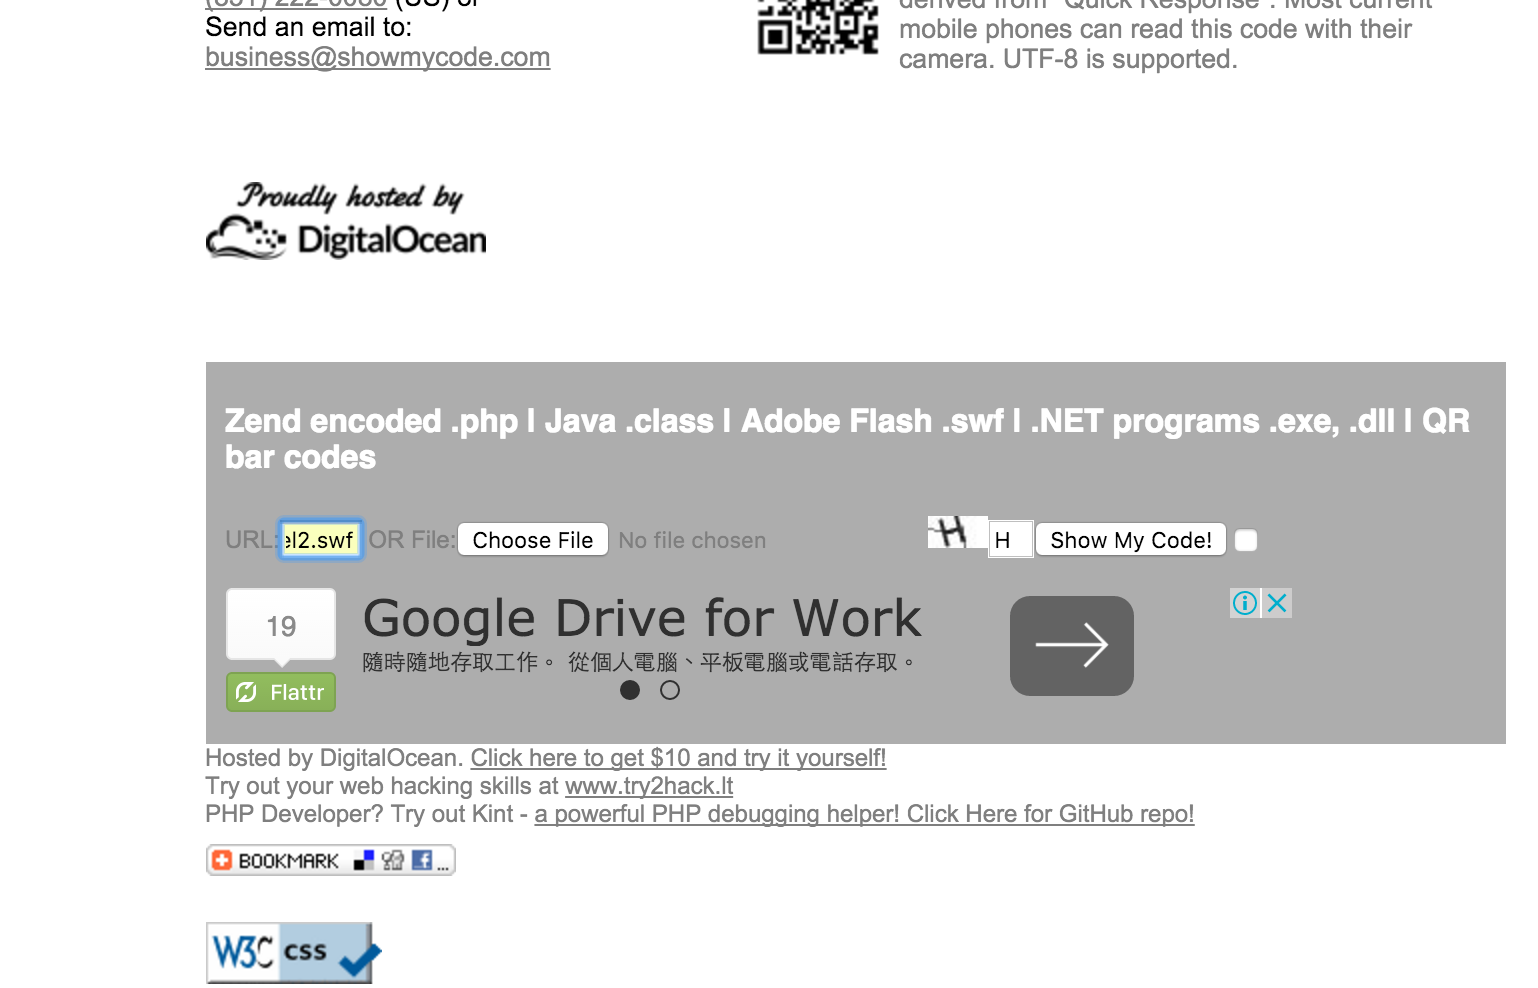 flash decompiler trillix name ad code